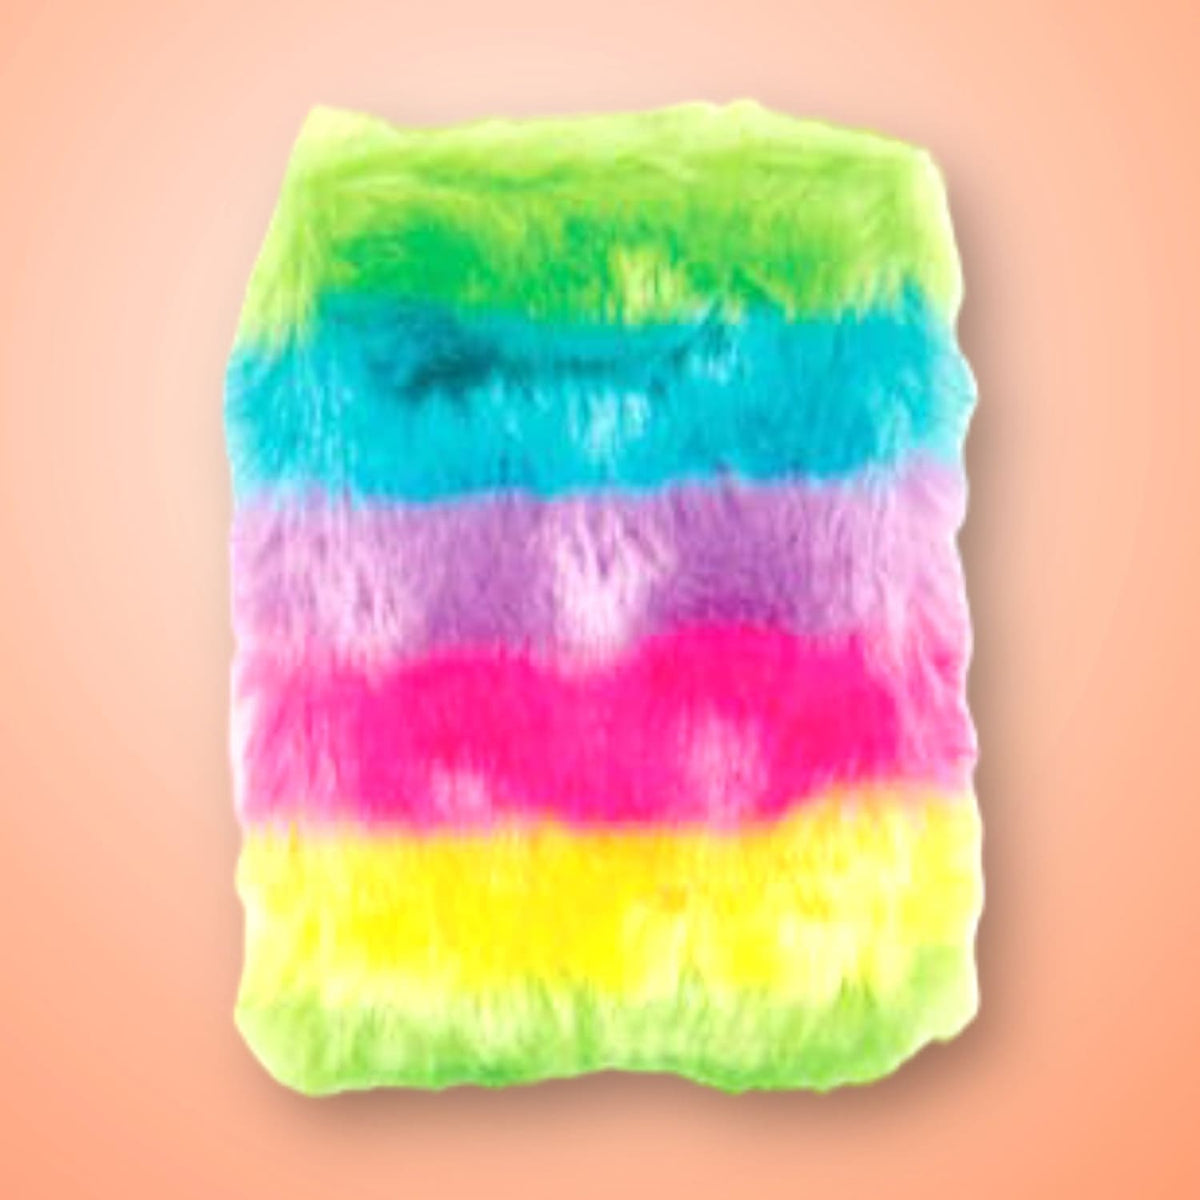 Furry Rainbow Memo Notebook Fuzzy - Notebook - Pride -